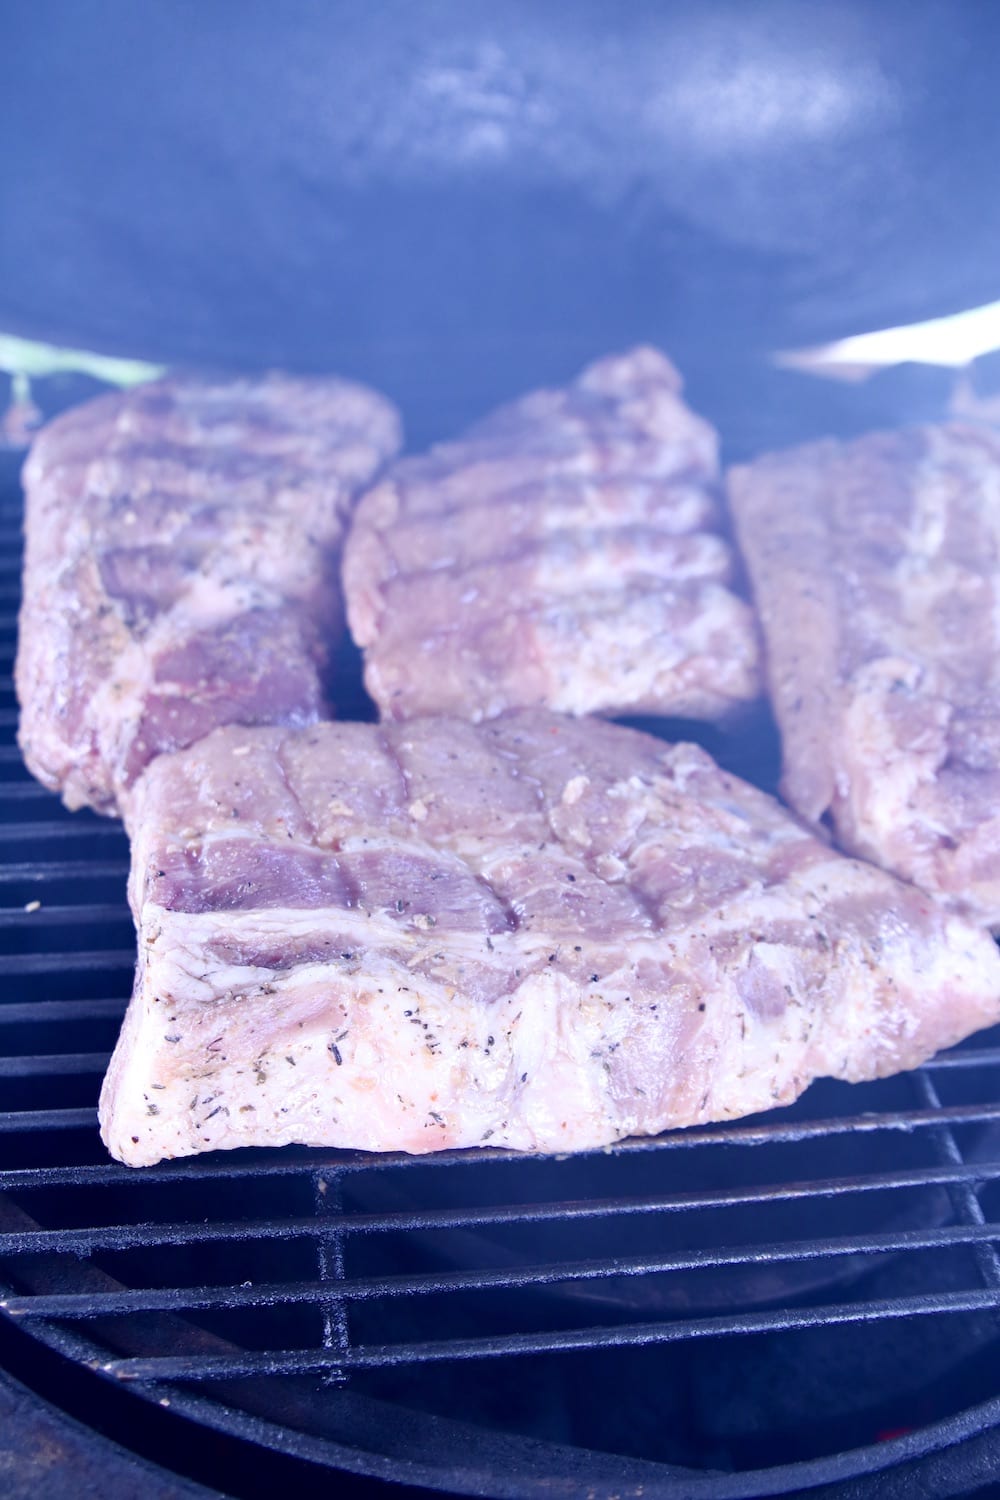 4 half racks of ribs on a grill